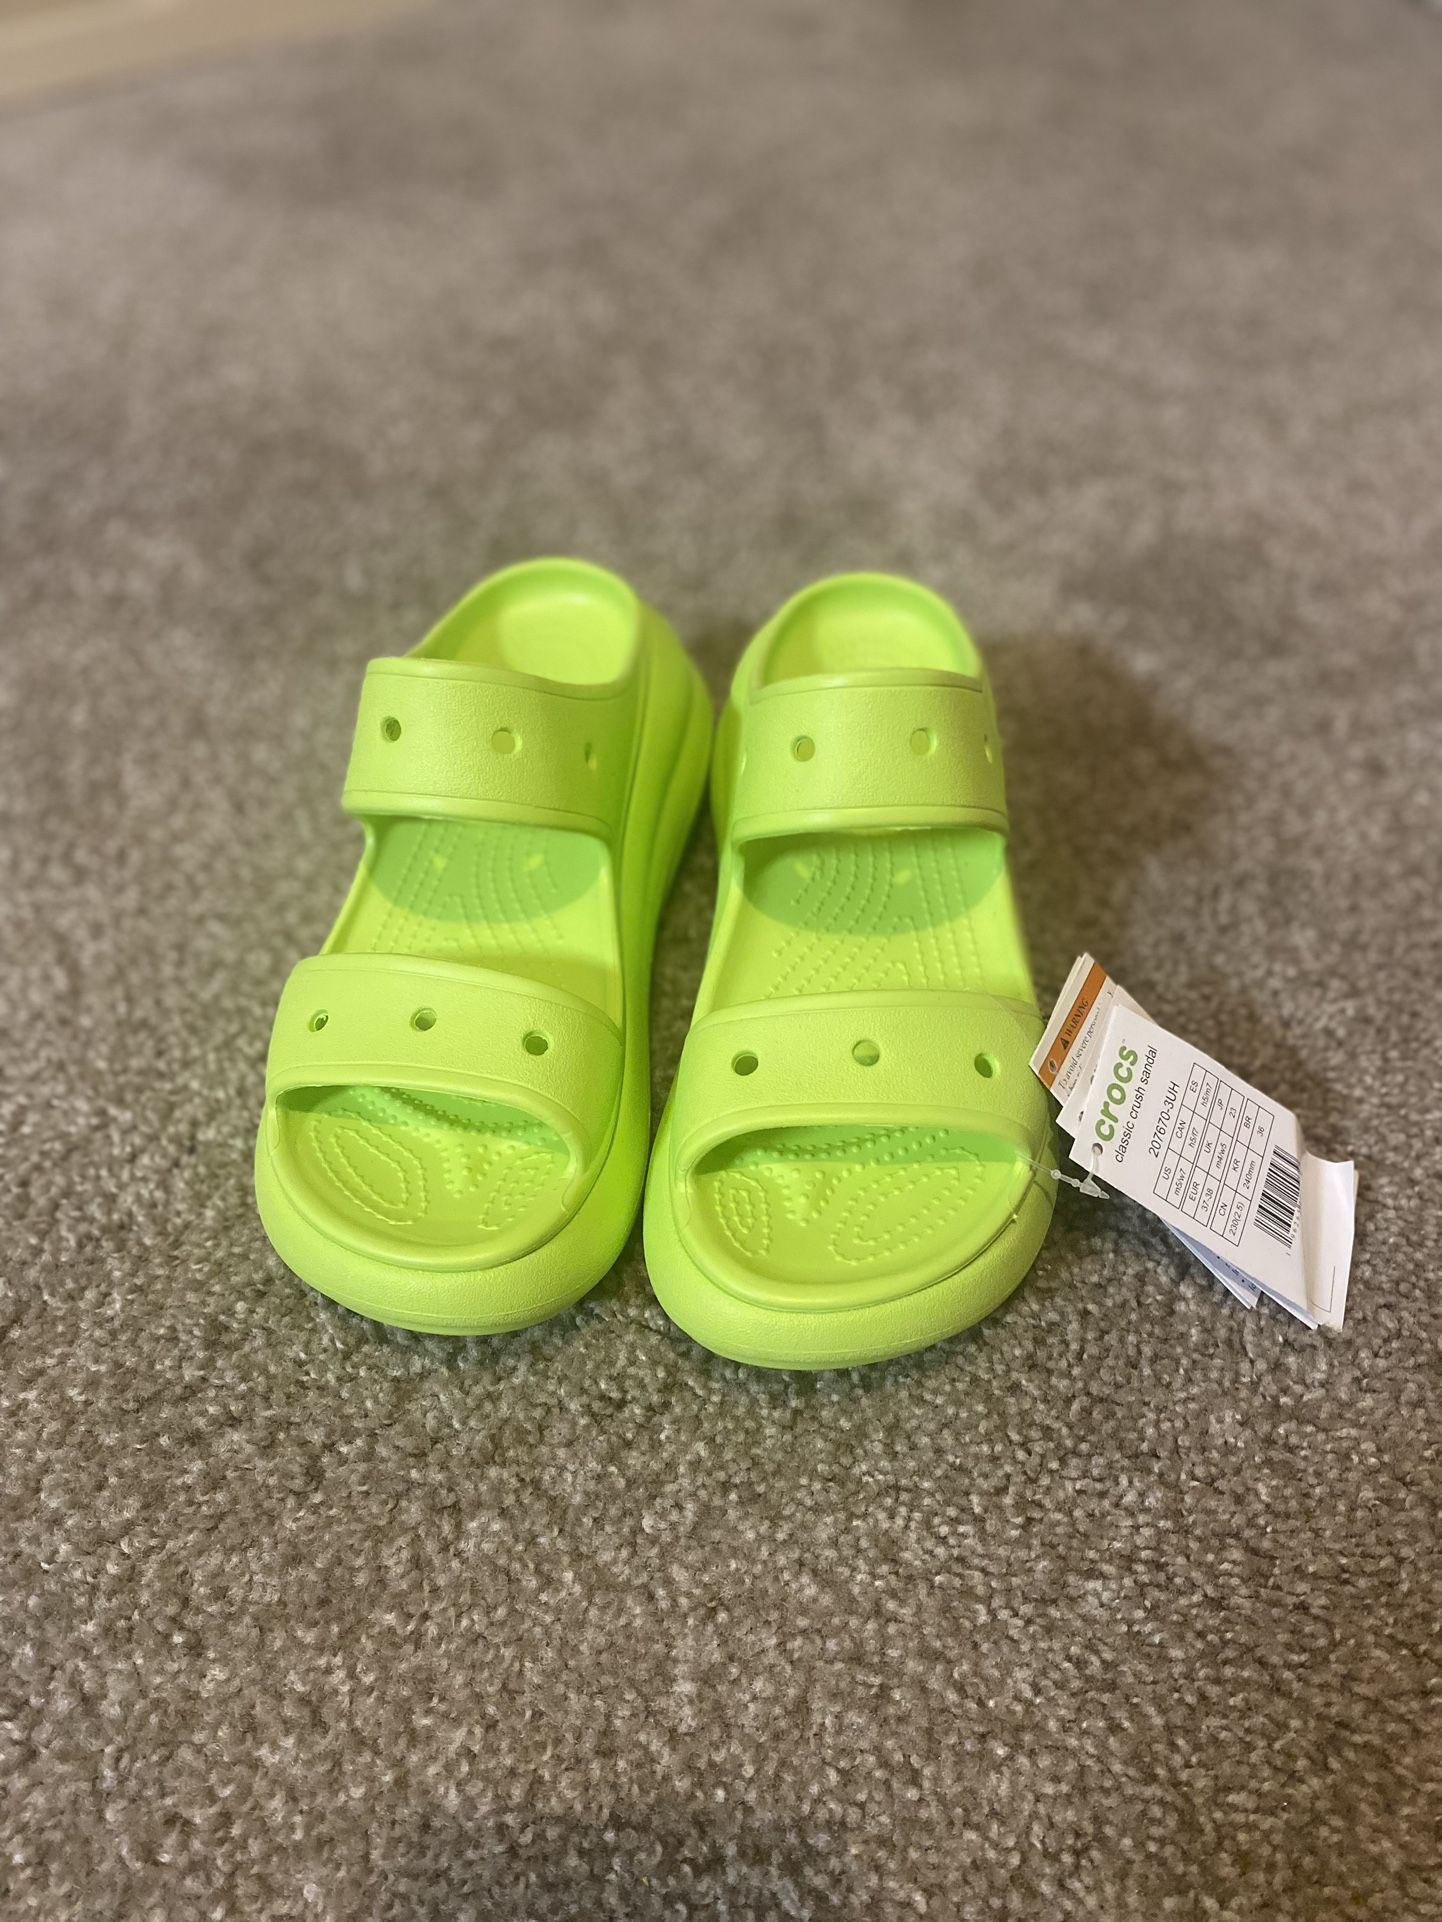 Brand New Green Crush Crocs Sandals.